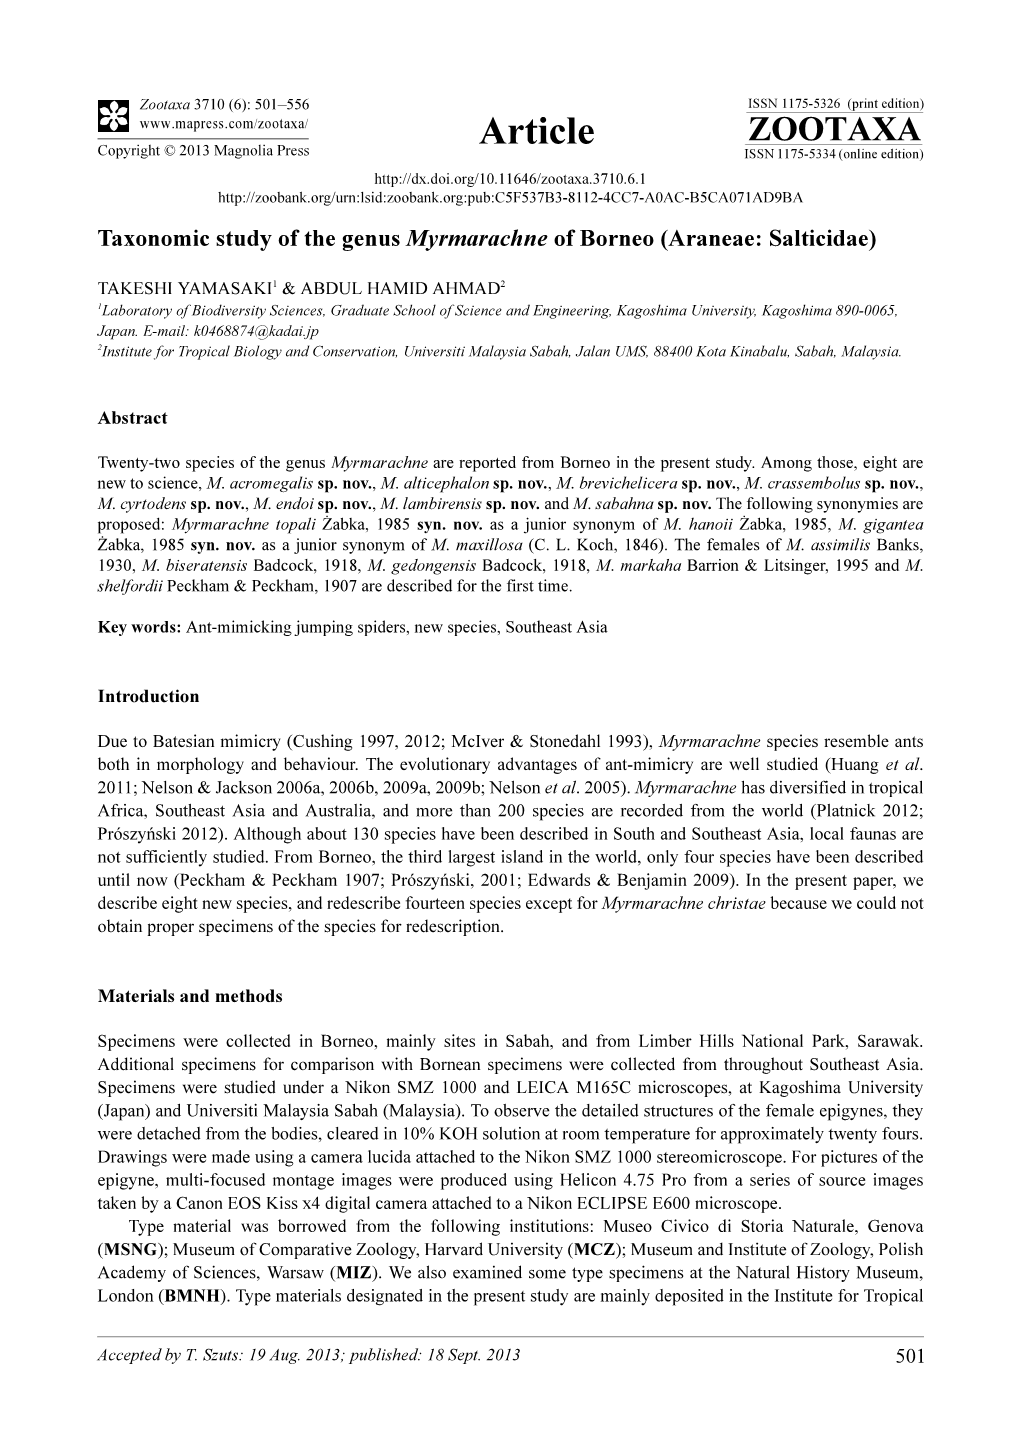 Taxonomic Study of the Genus Myrmarachne of Borneo (Araneae: Salticidae)